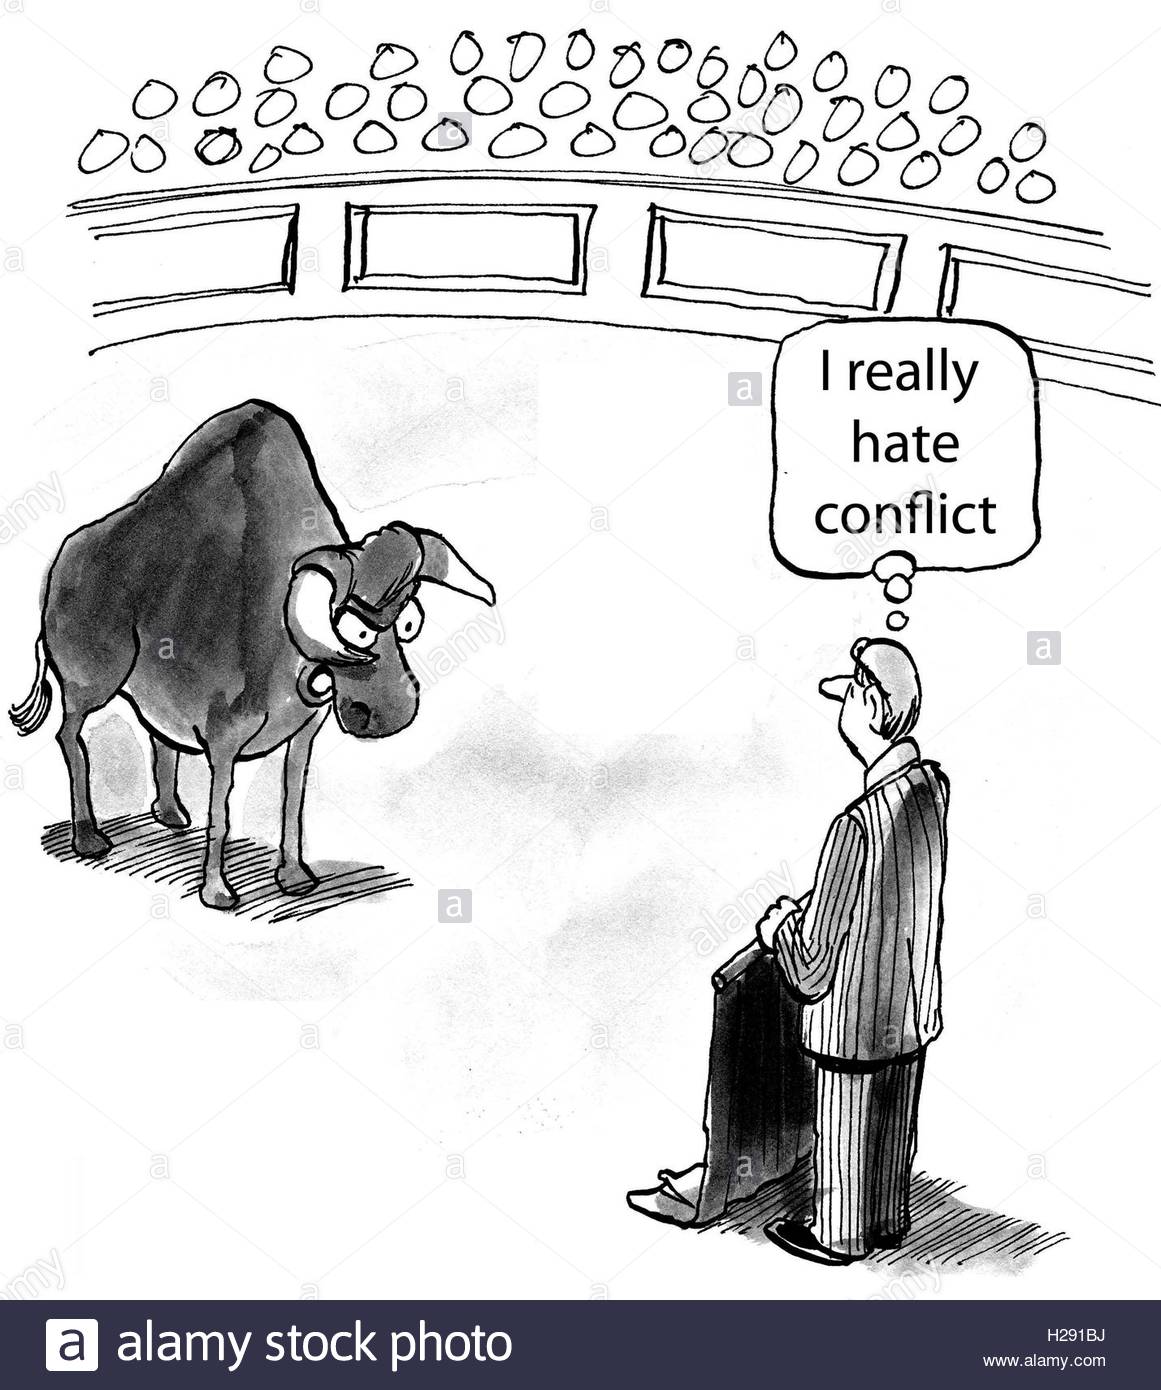 Conflict Resolution Cartoon Stock Photos & Conflict Resolution Cartoon ...